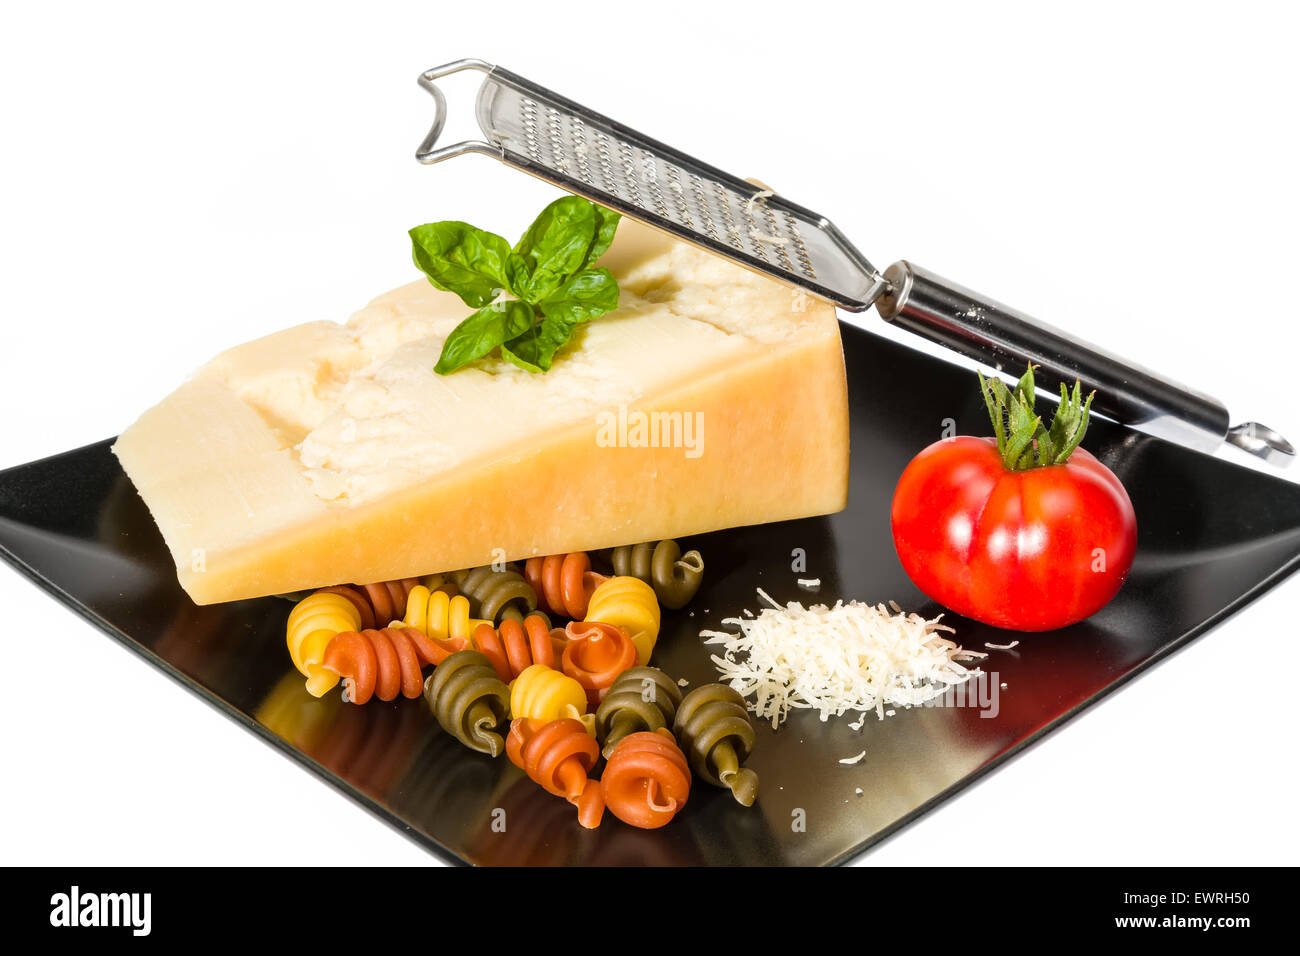 Cheese, pasta, tomato and basil - raw ingredient of Italian cuisine Stock Photo